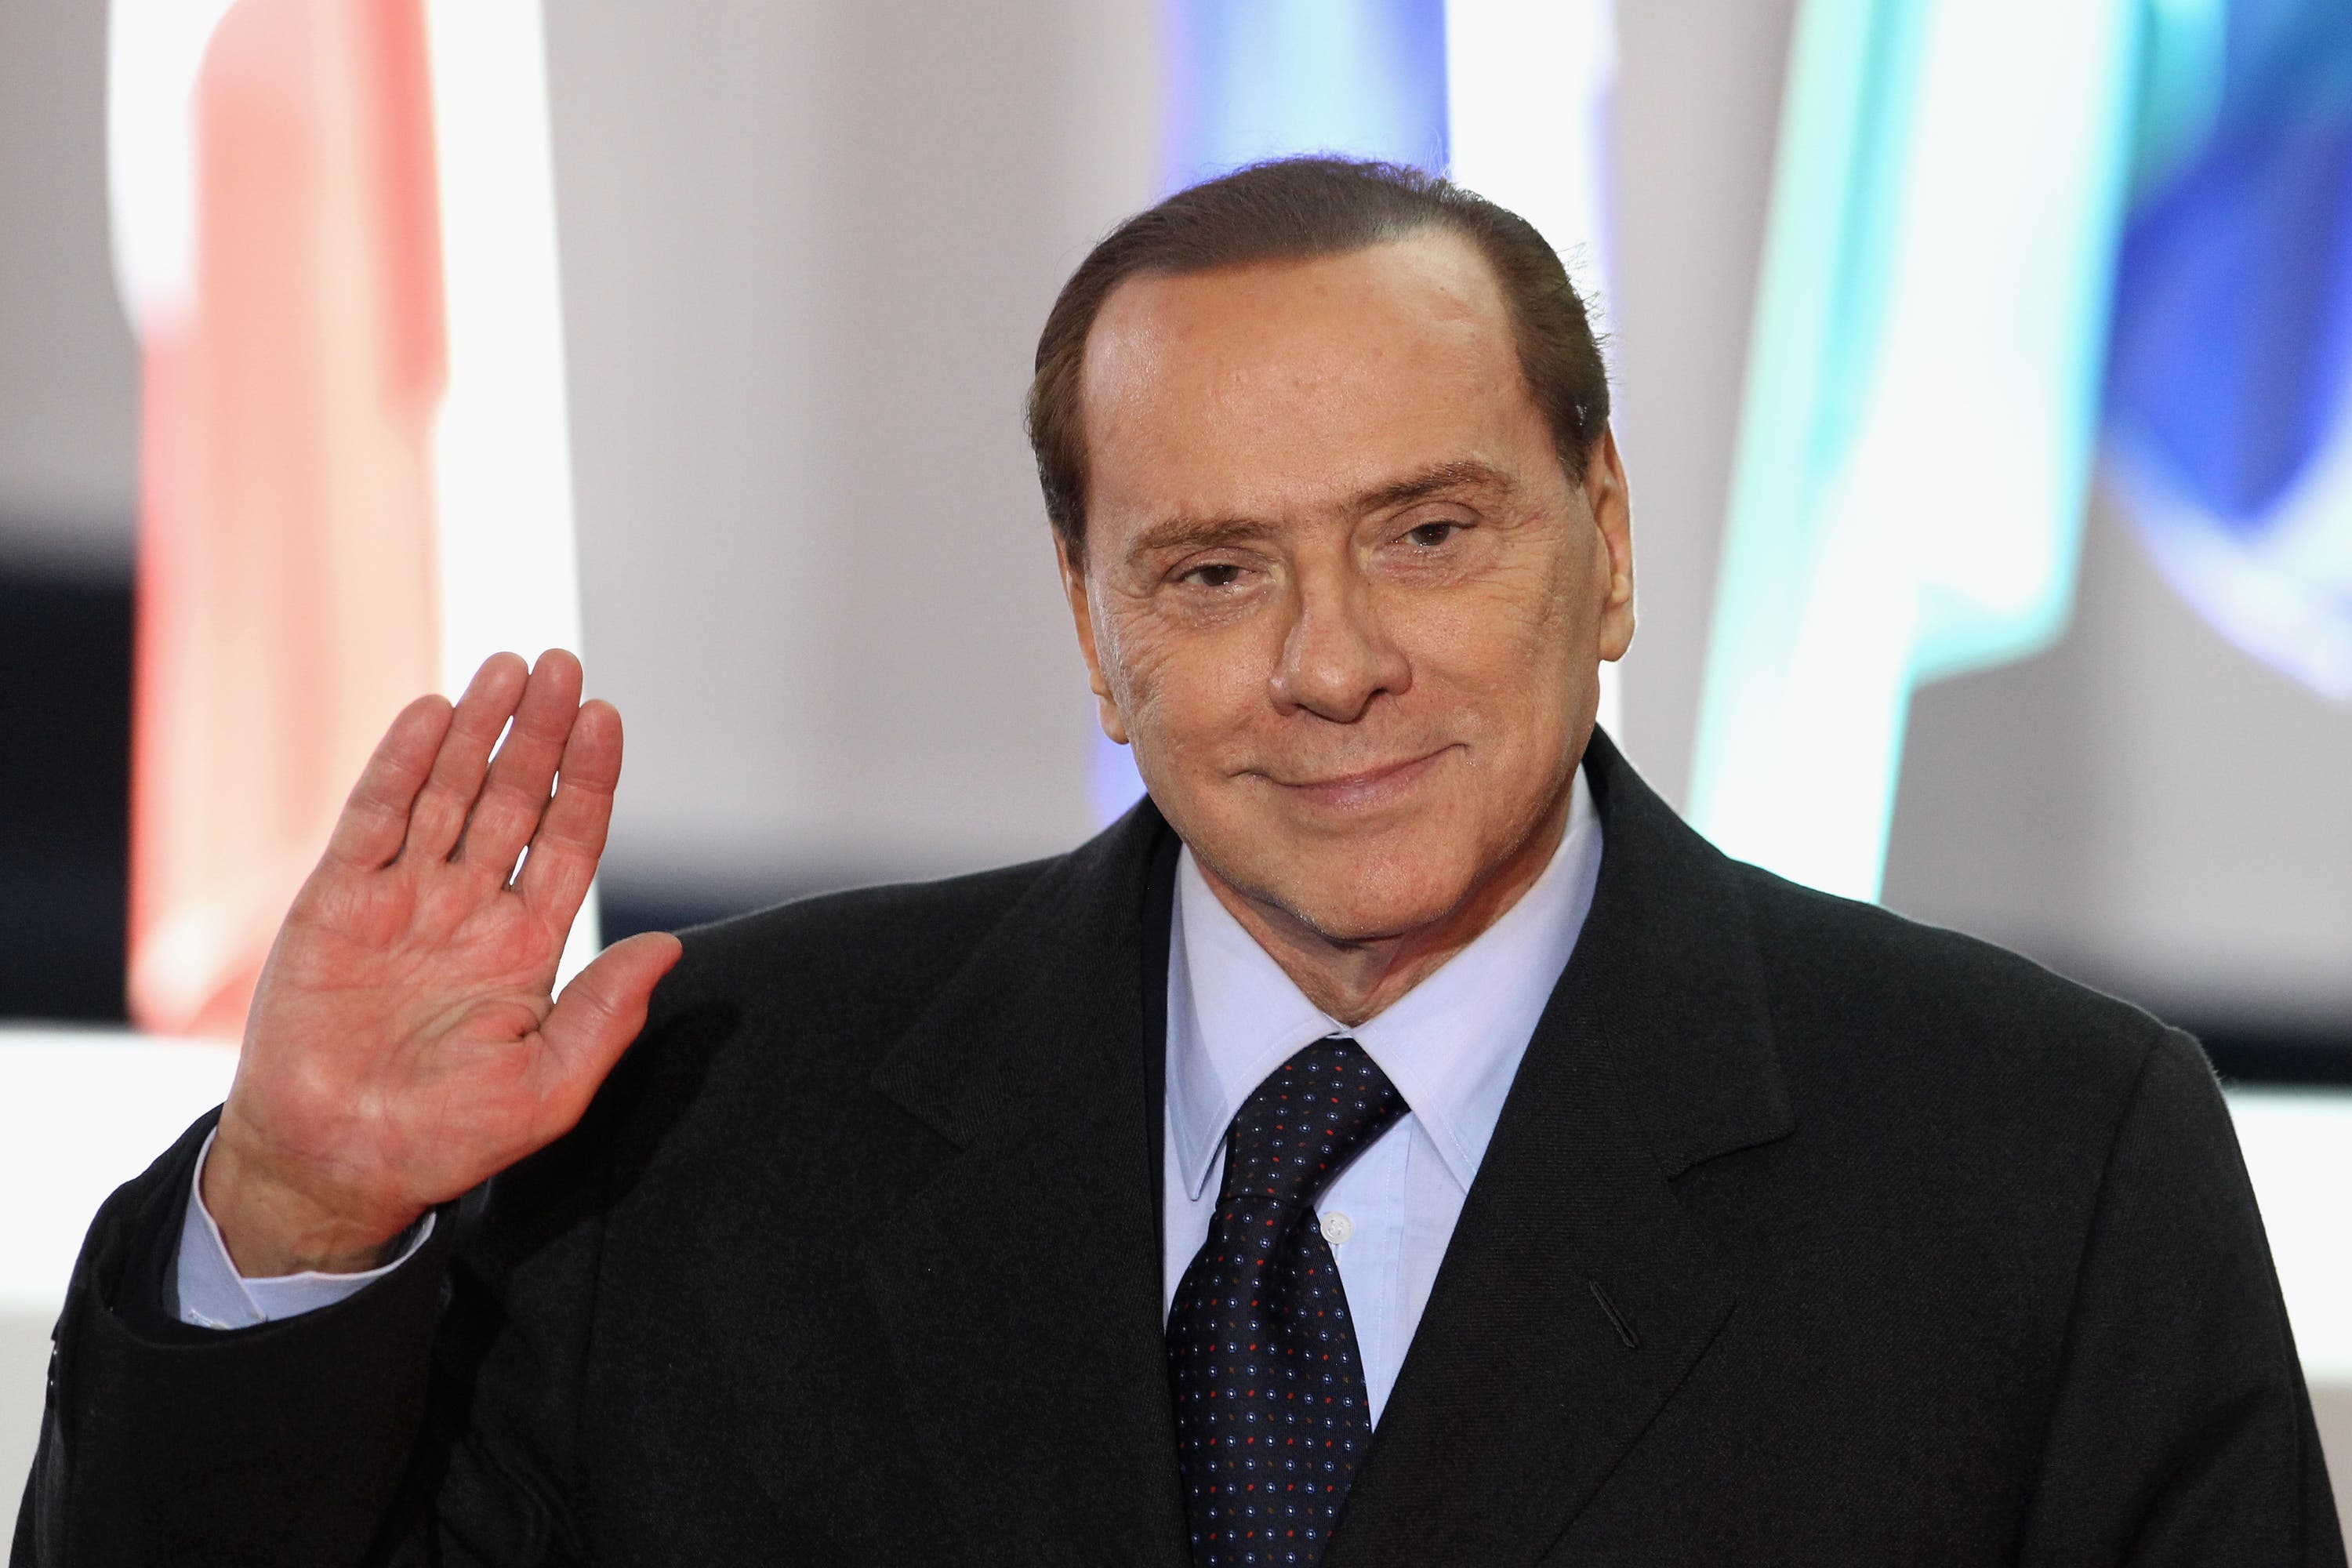 Silvio Berlusconi, former prime minister of Italy, dies aged 86 following leukaemia diagnosis STV News photo